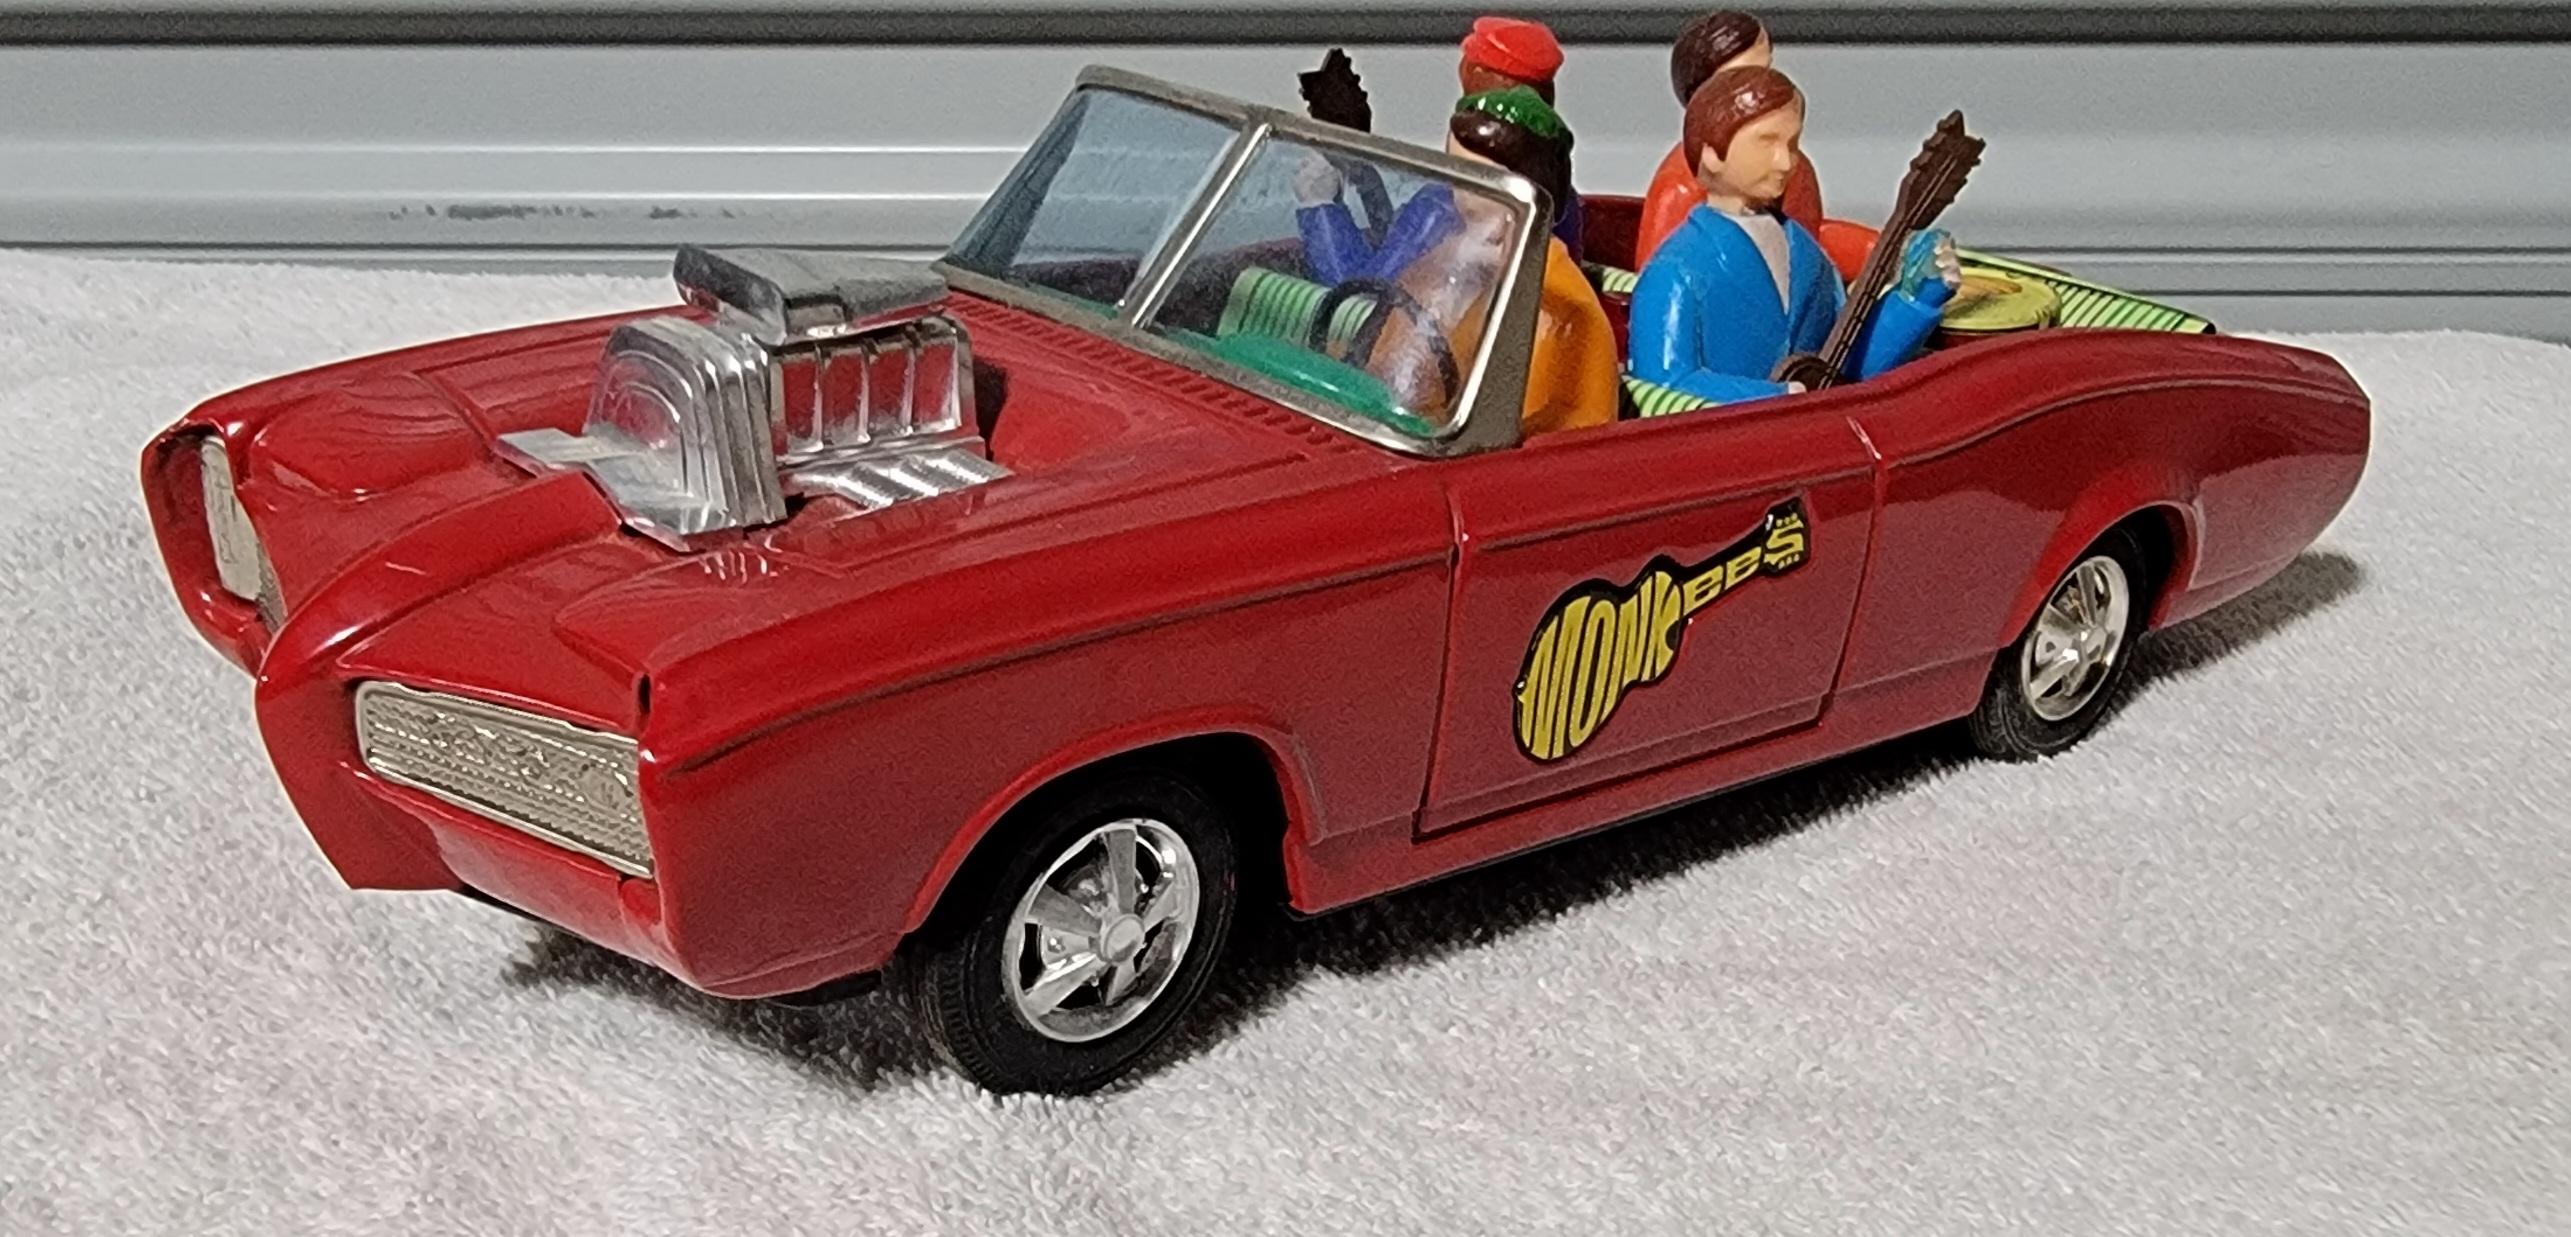 Monkeys Monkee-Mobile Toy Car 5